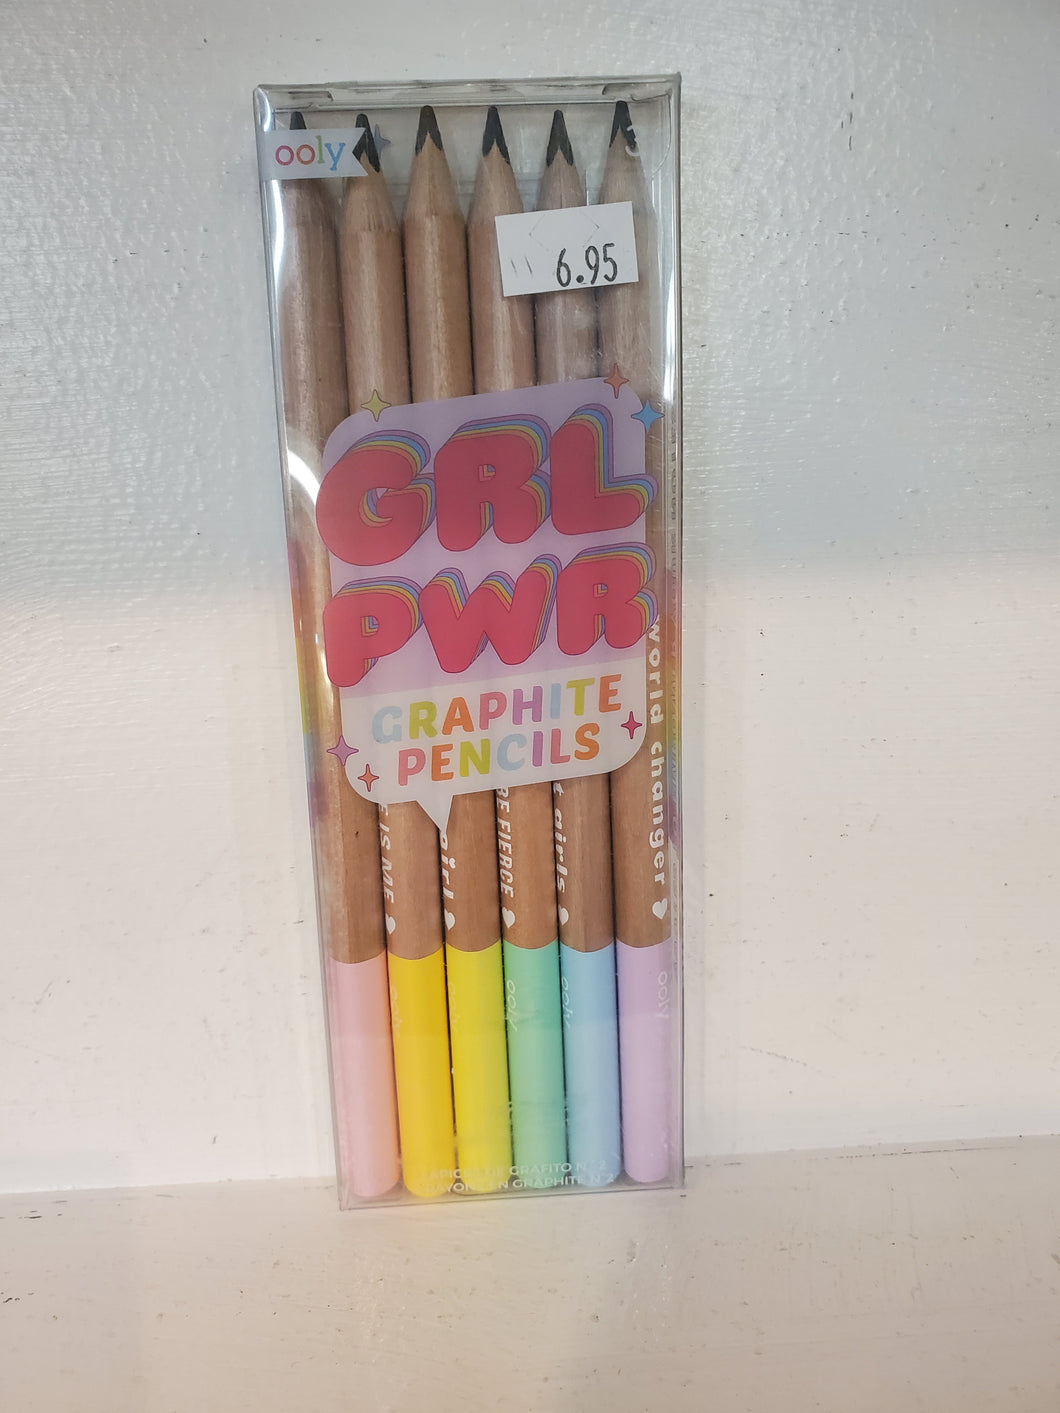 GRL PWR: Graphite Pencils